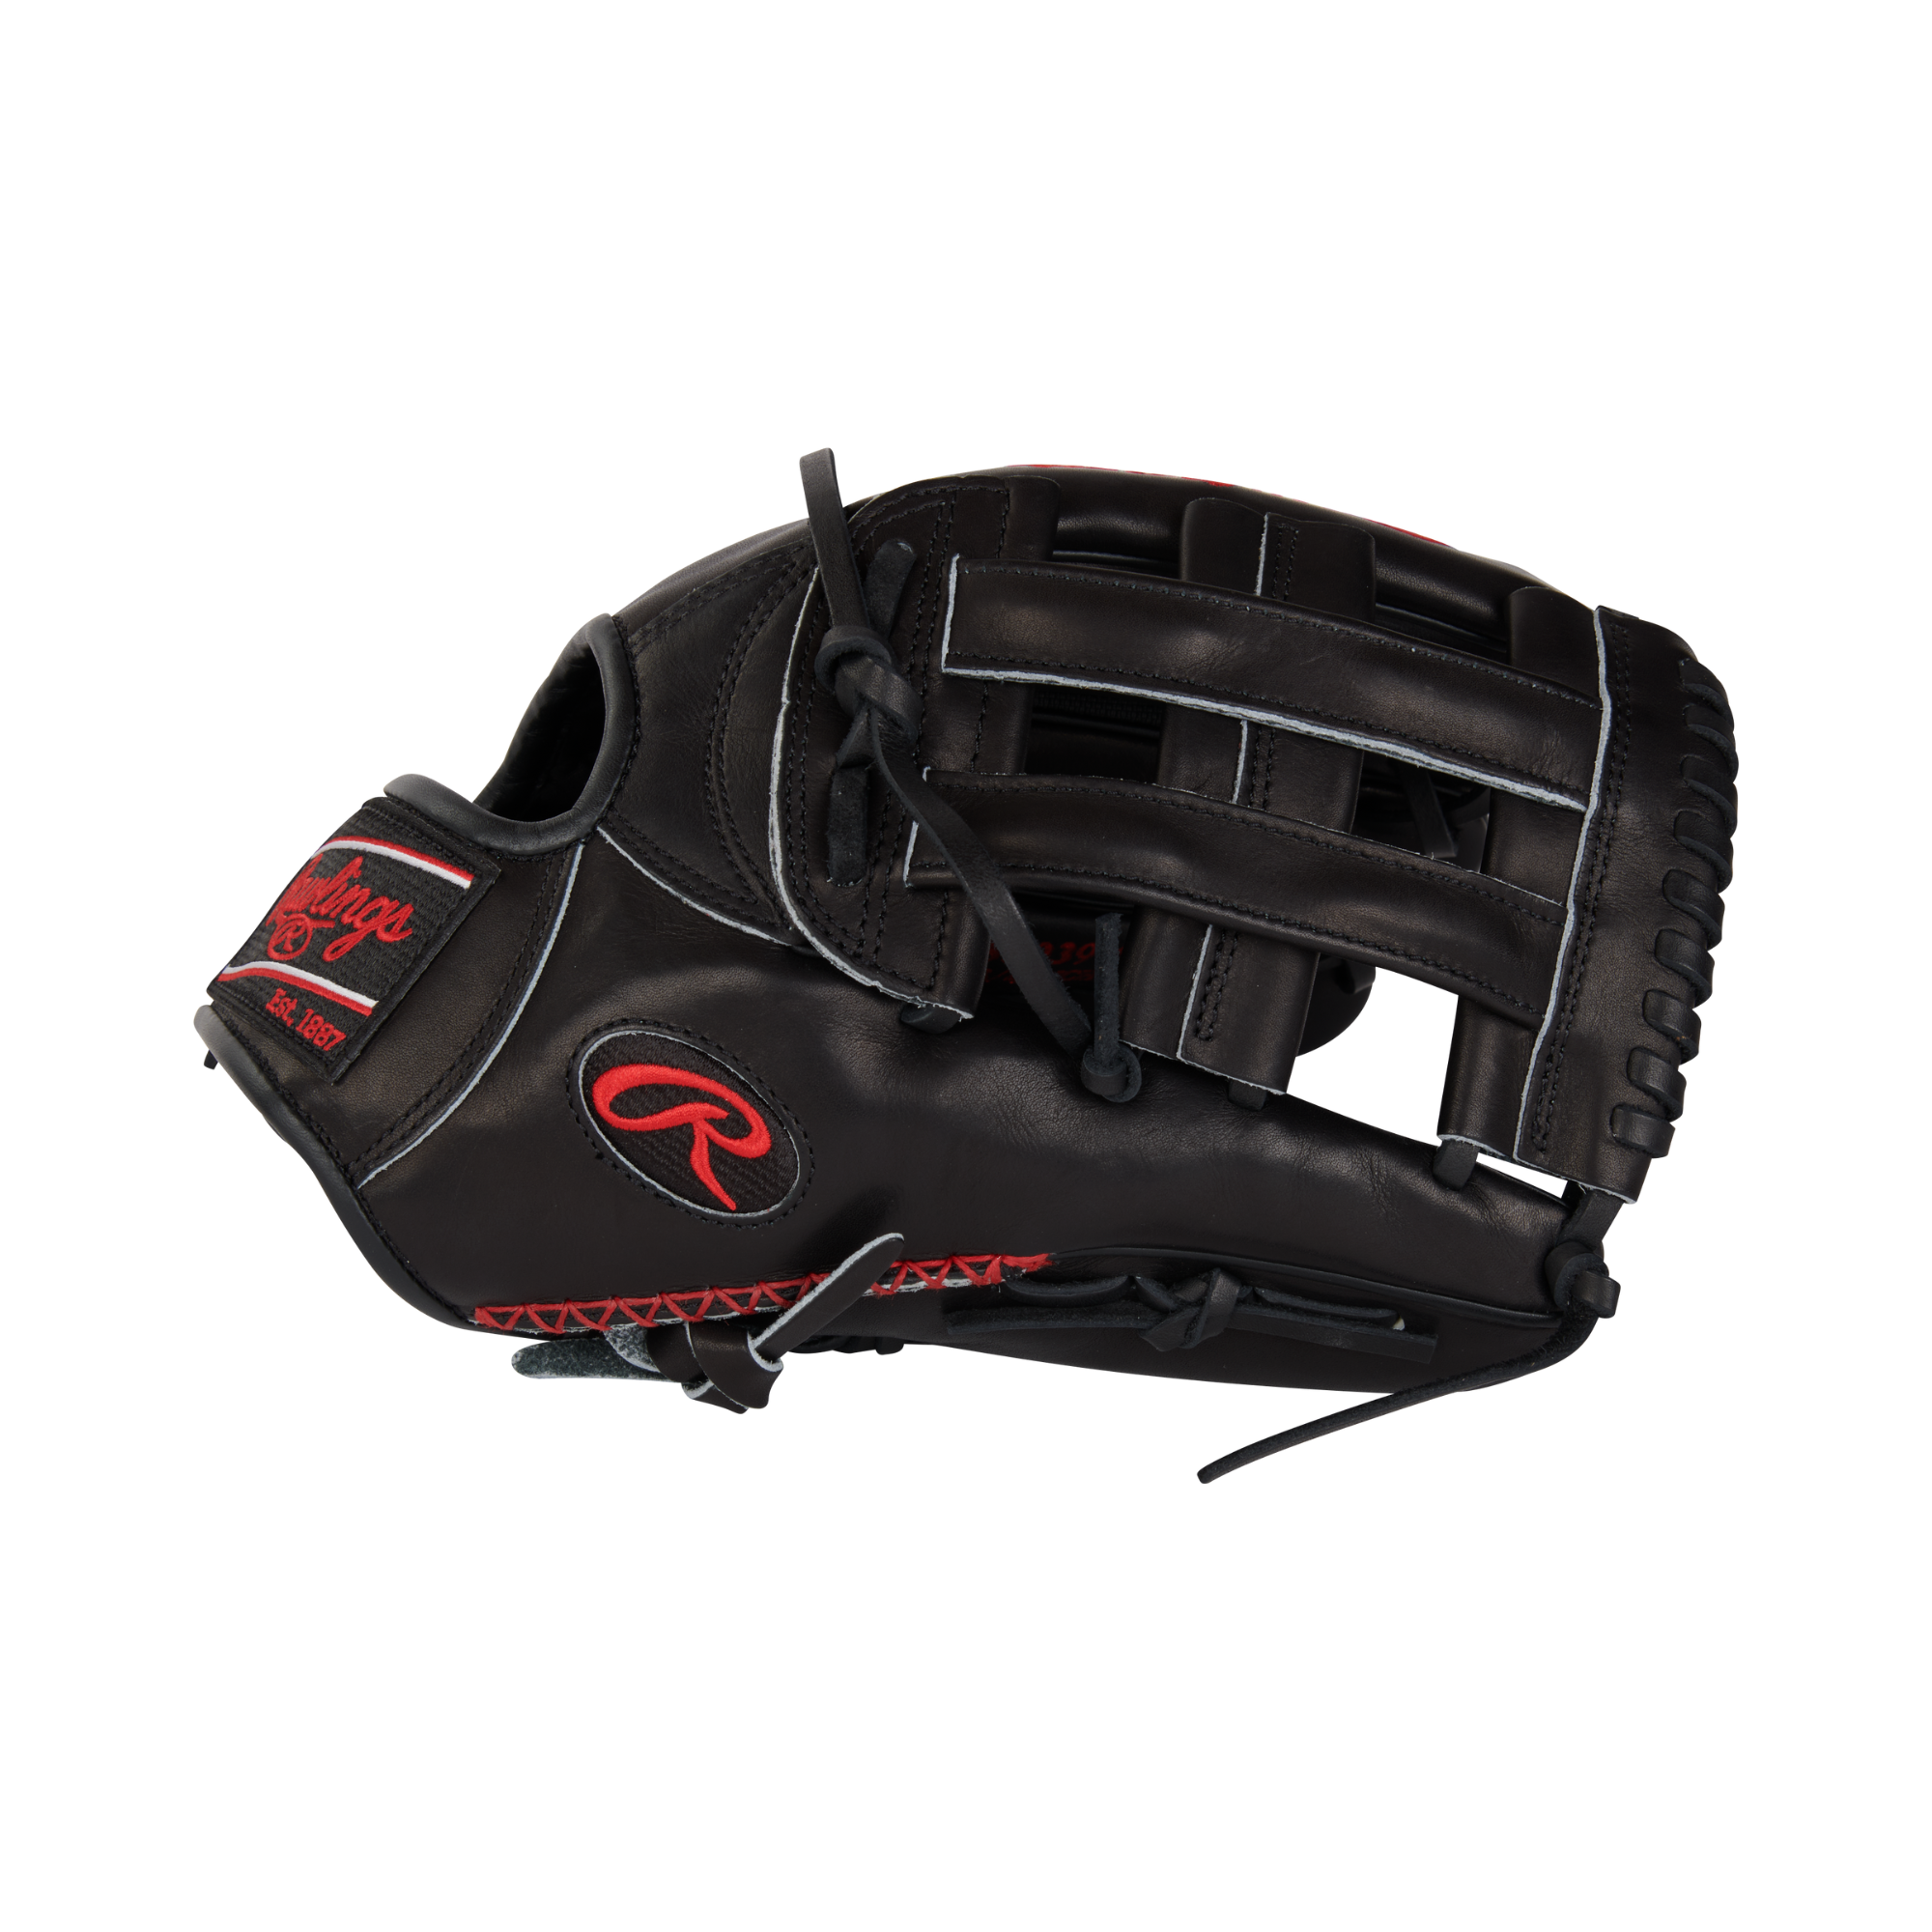 Rawlings Pro Preferred Series Baseball Glove 12.75" LHT